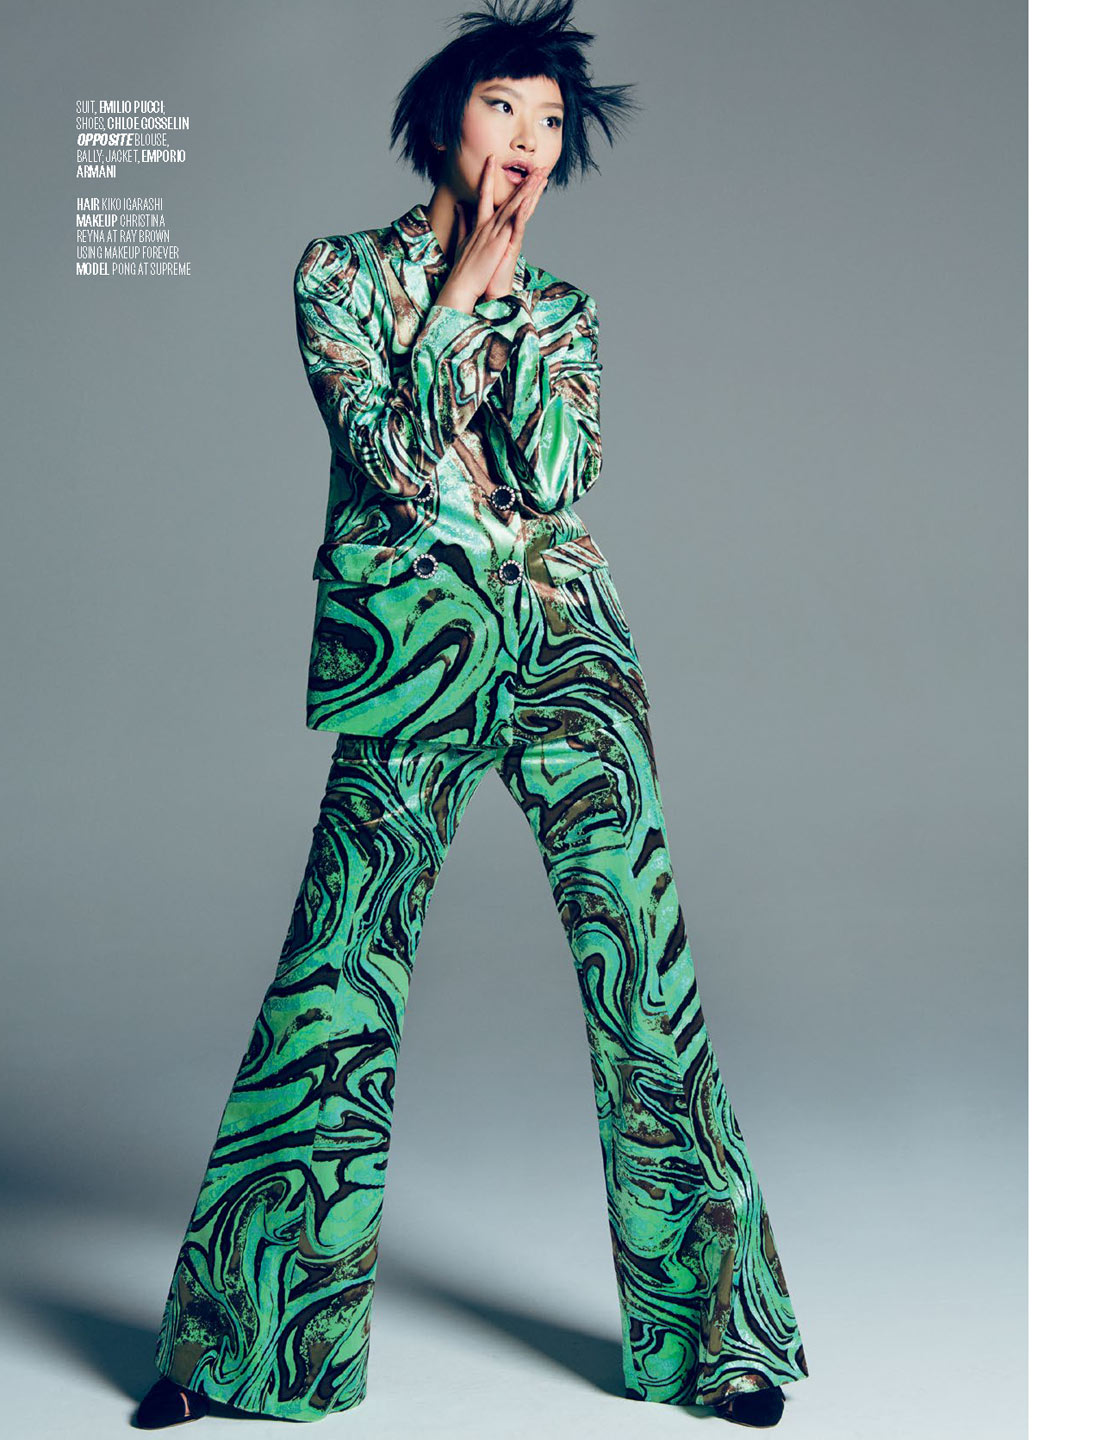 Fun Color Fashion Story - Vogue Arabia Magazine - Model Pong Lee I Greg Sorensen I Fashion & Beauty Photographer I NYC